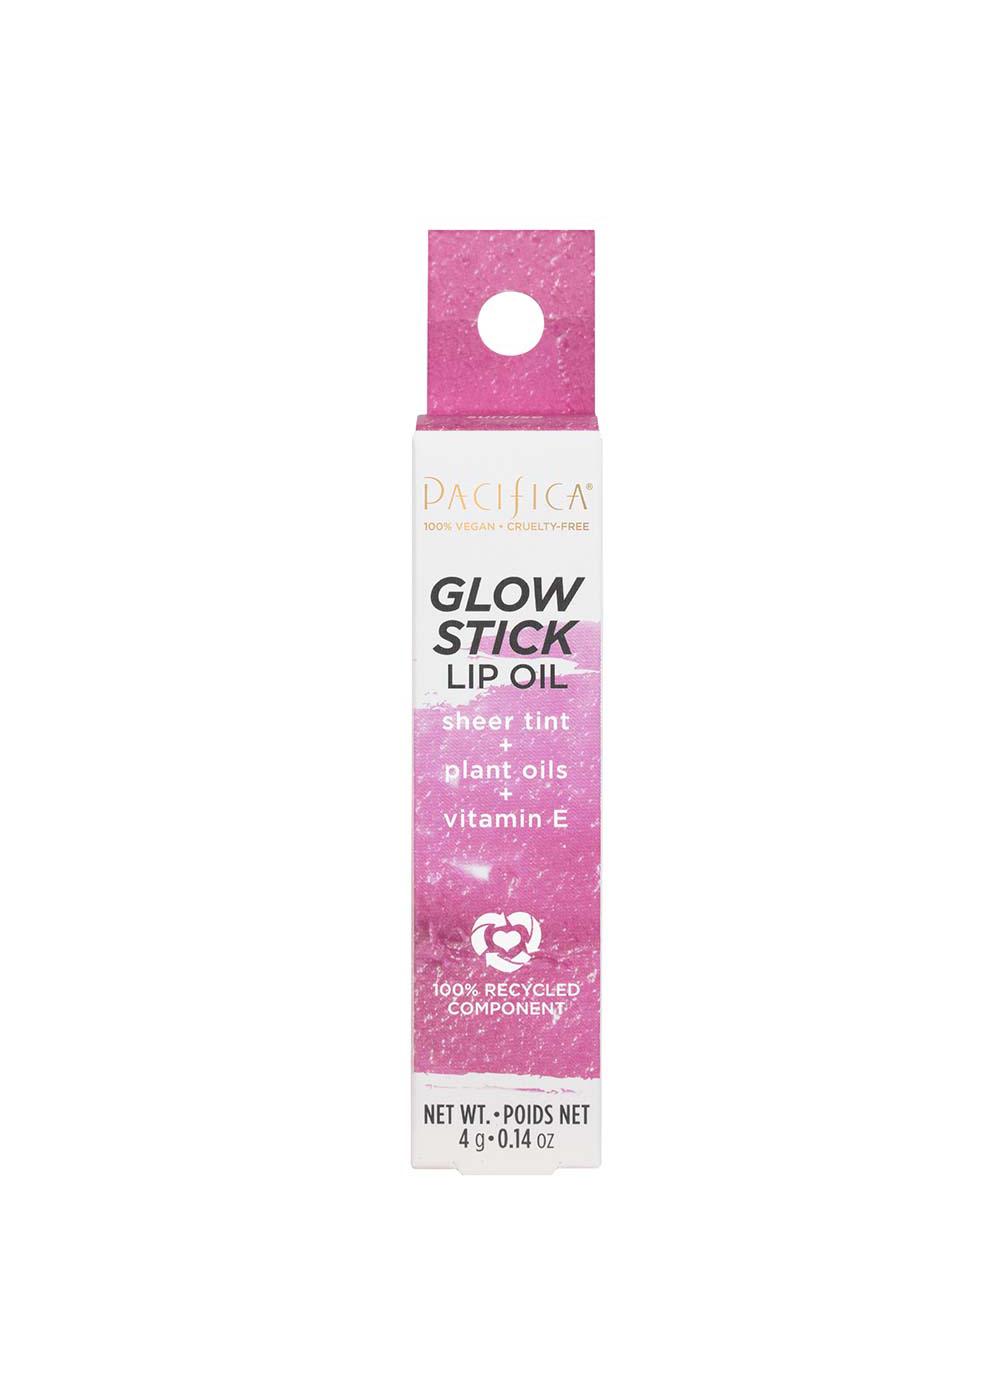 Pacifica Glow Stick Lip Oil - Sunrise; image 1 of 5